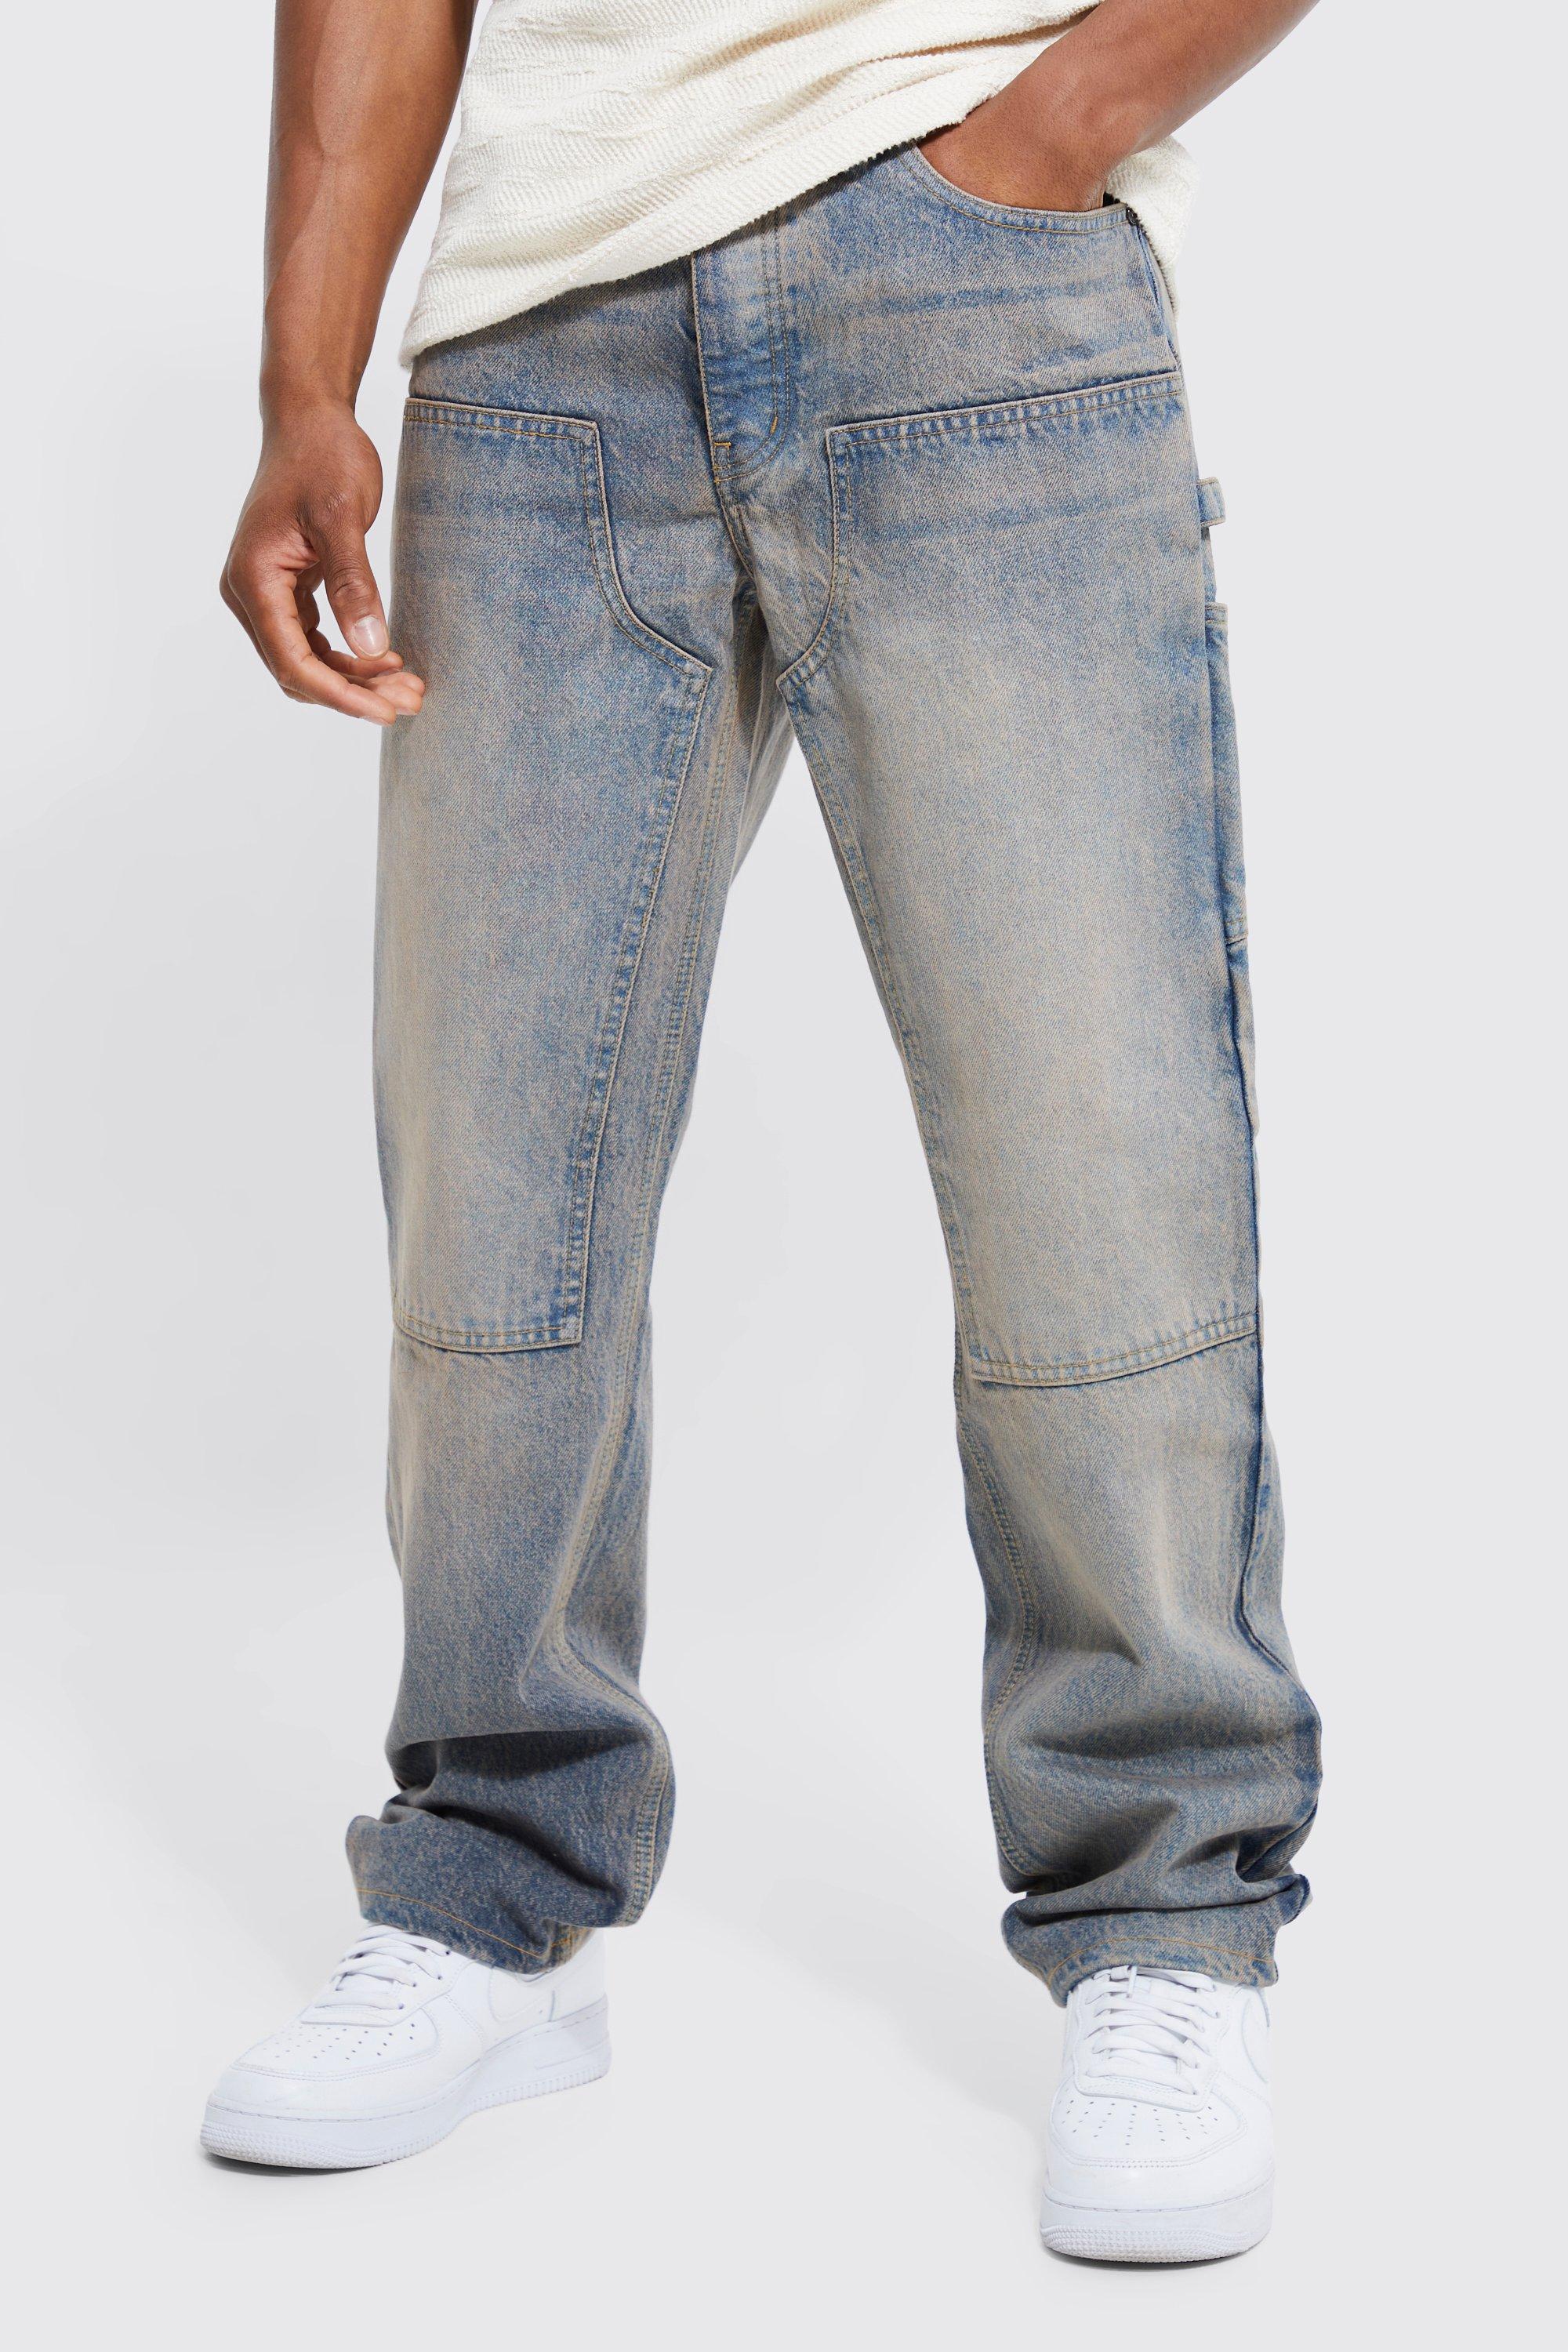 billetpris Imidlertid oversøisk Relaxed Rigid Carpenter Detail Jeans | boohooMAN UK